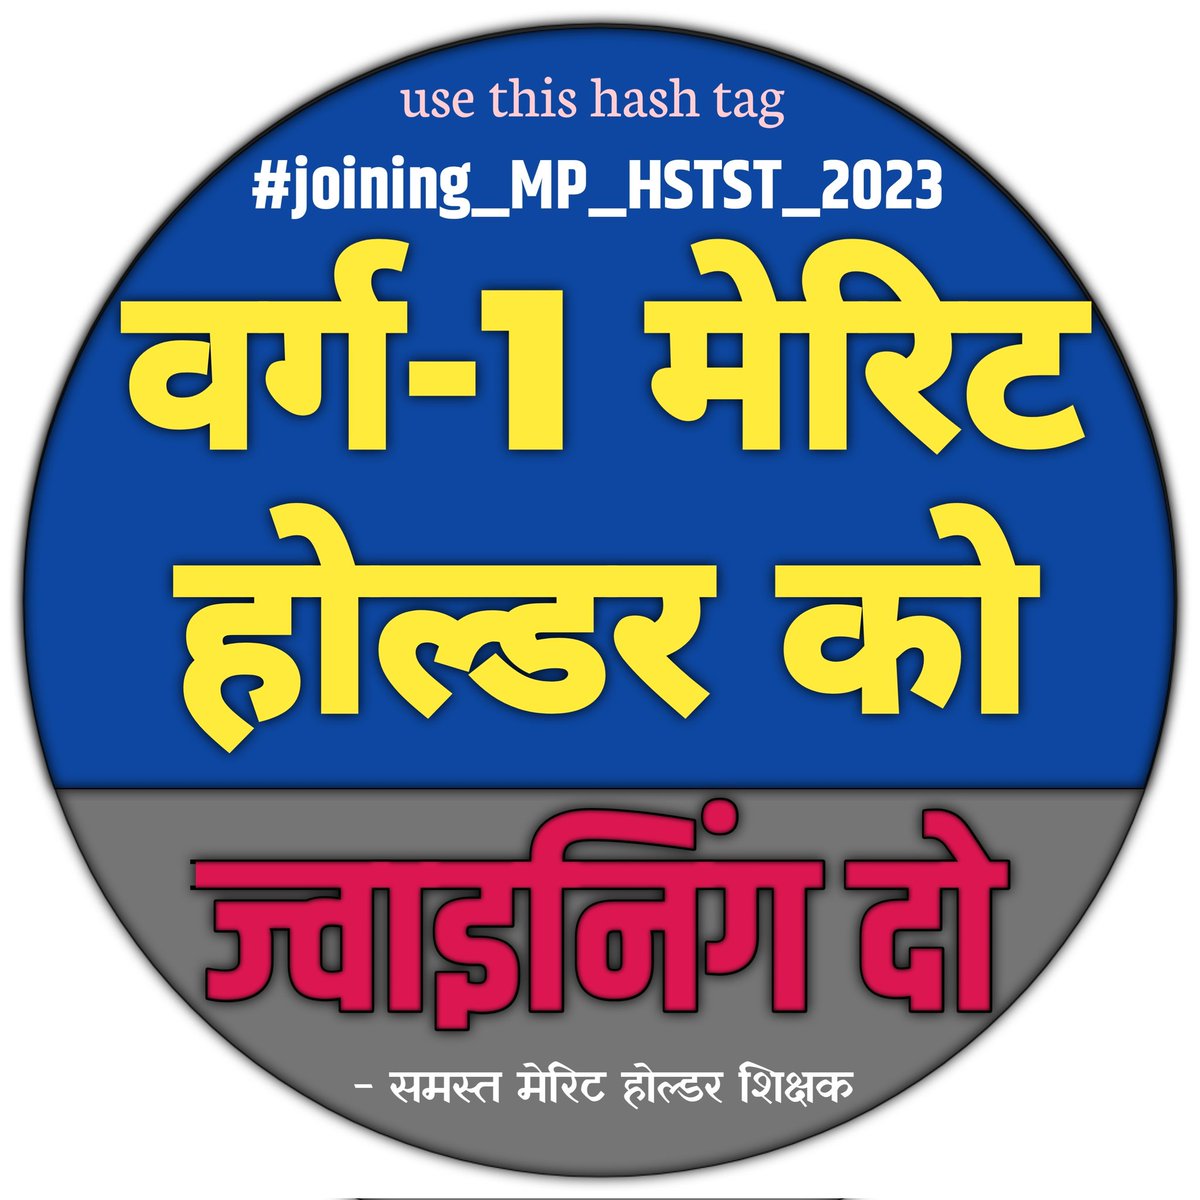 #joining_MP_HSTST_2023
@CMMadhyaPradesh @DrMohanYadav51 @udaypratapmp @schooledump @WelfareTribal @JansamparkMP @GADdeptment @TheLallantop @MPTakOfficial @News24_MPCG @DainikBhaskar @BhopalSamachar @BansalNewsMPCG 
@PMOIndia